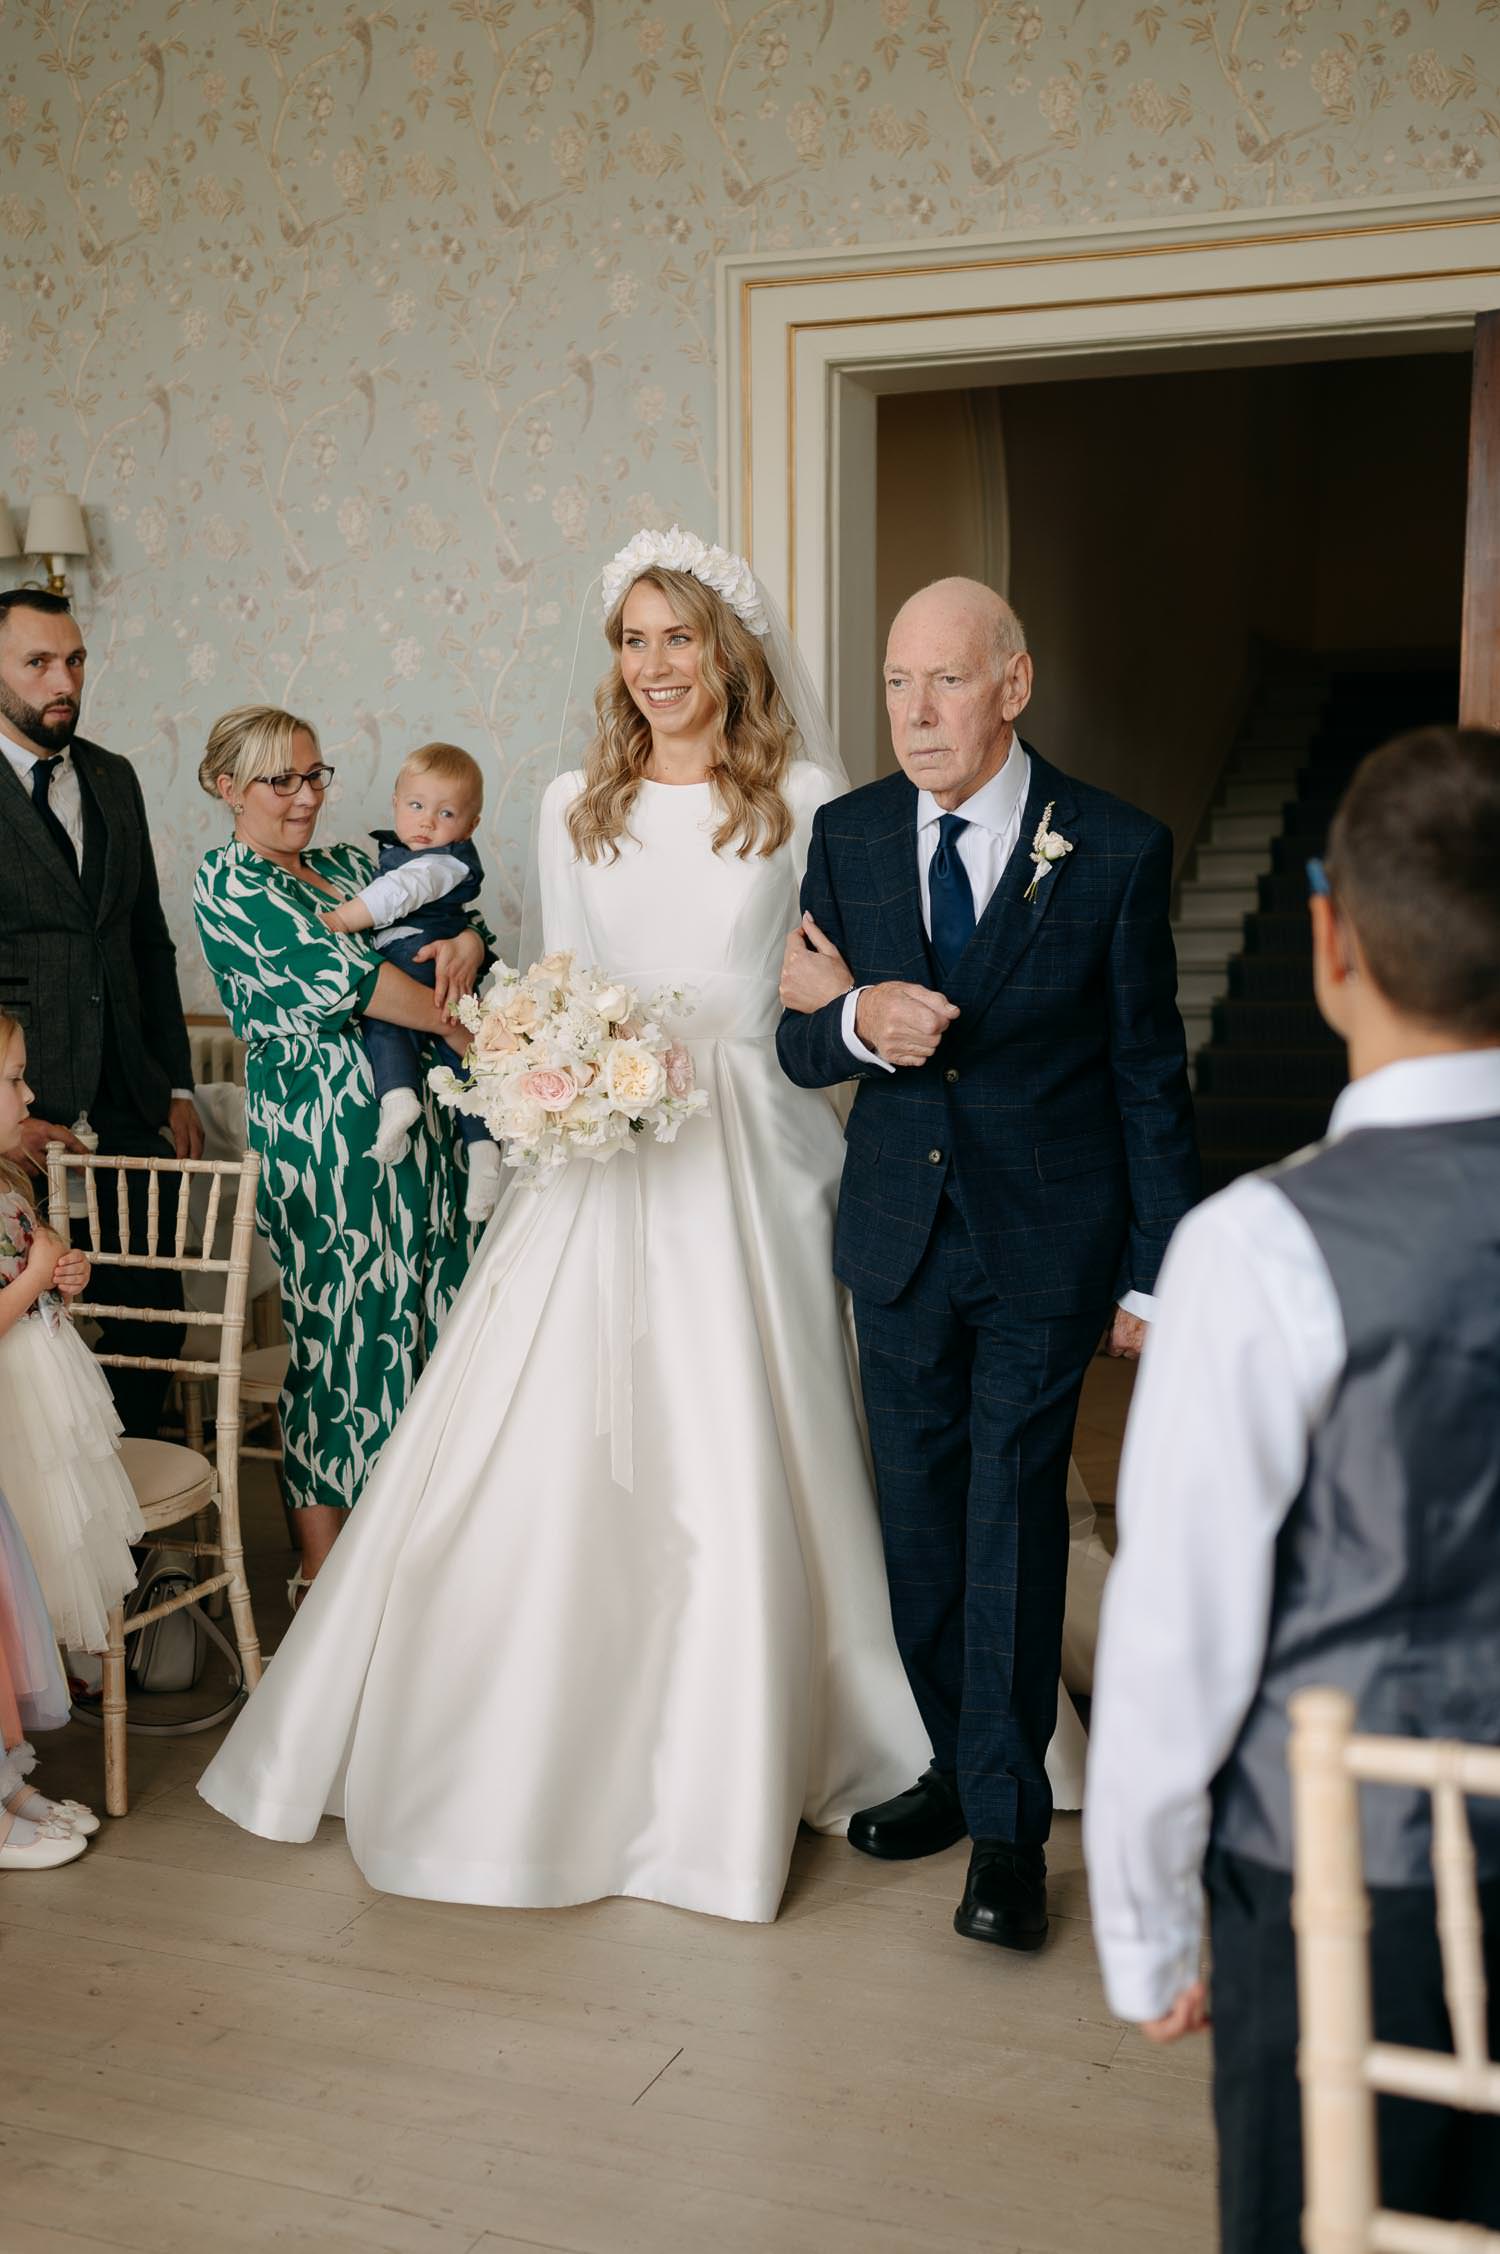 Pynes House wedding by Somerset wedding photographer Sophia Veres Photography.